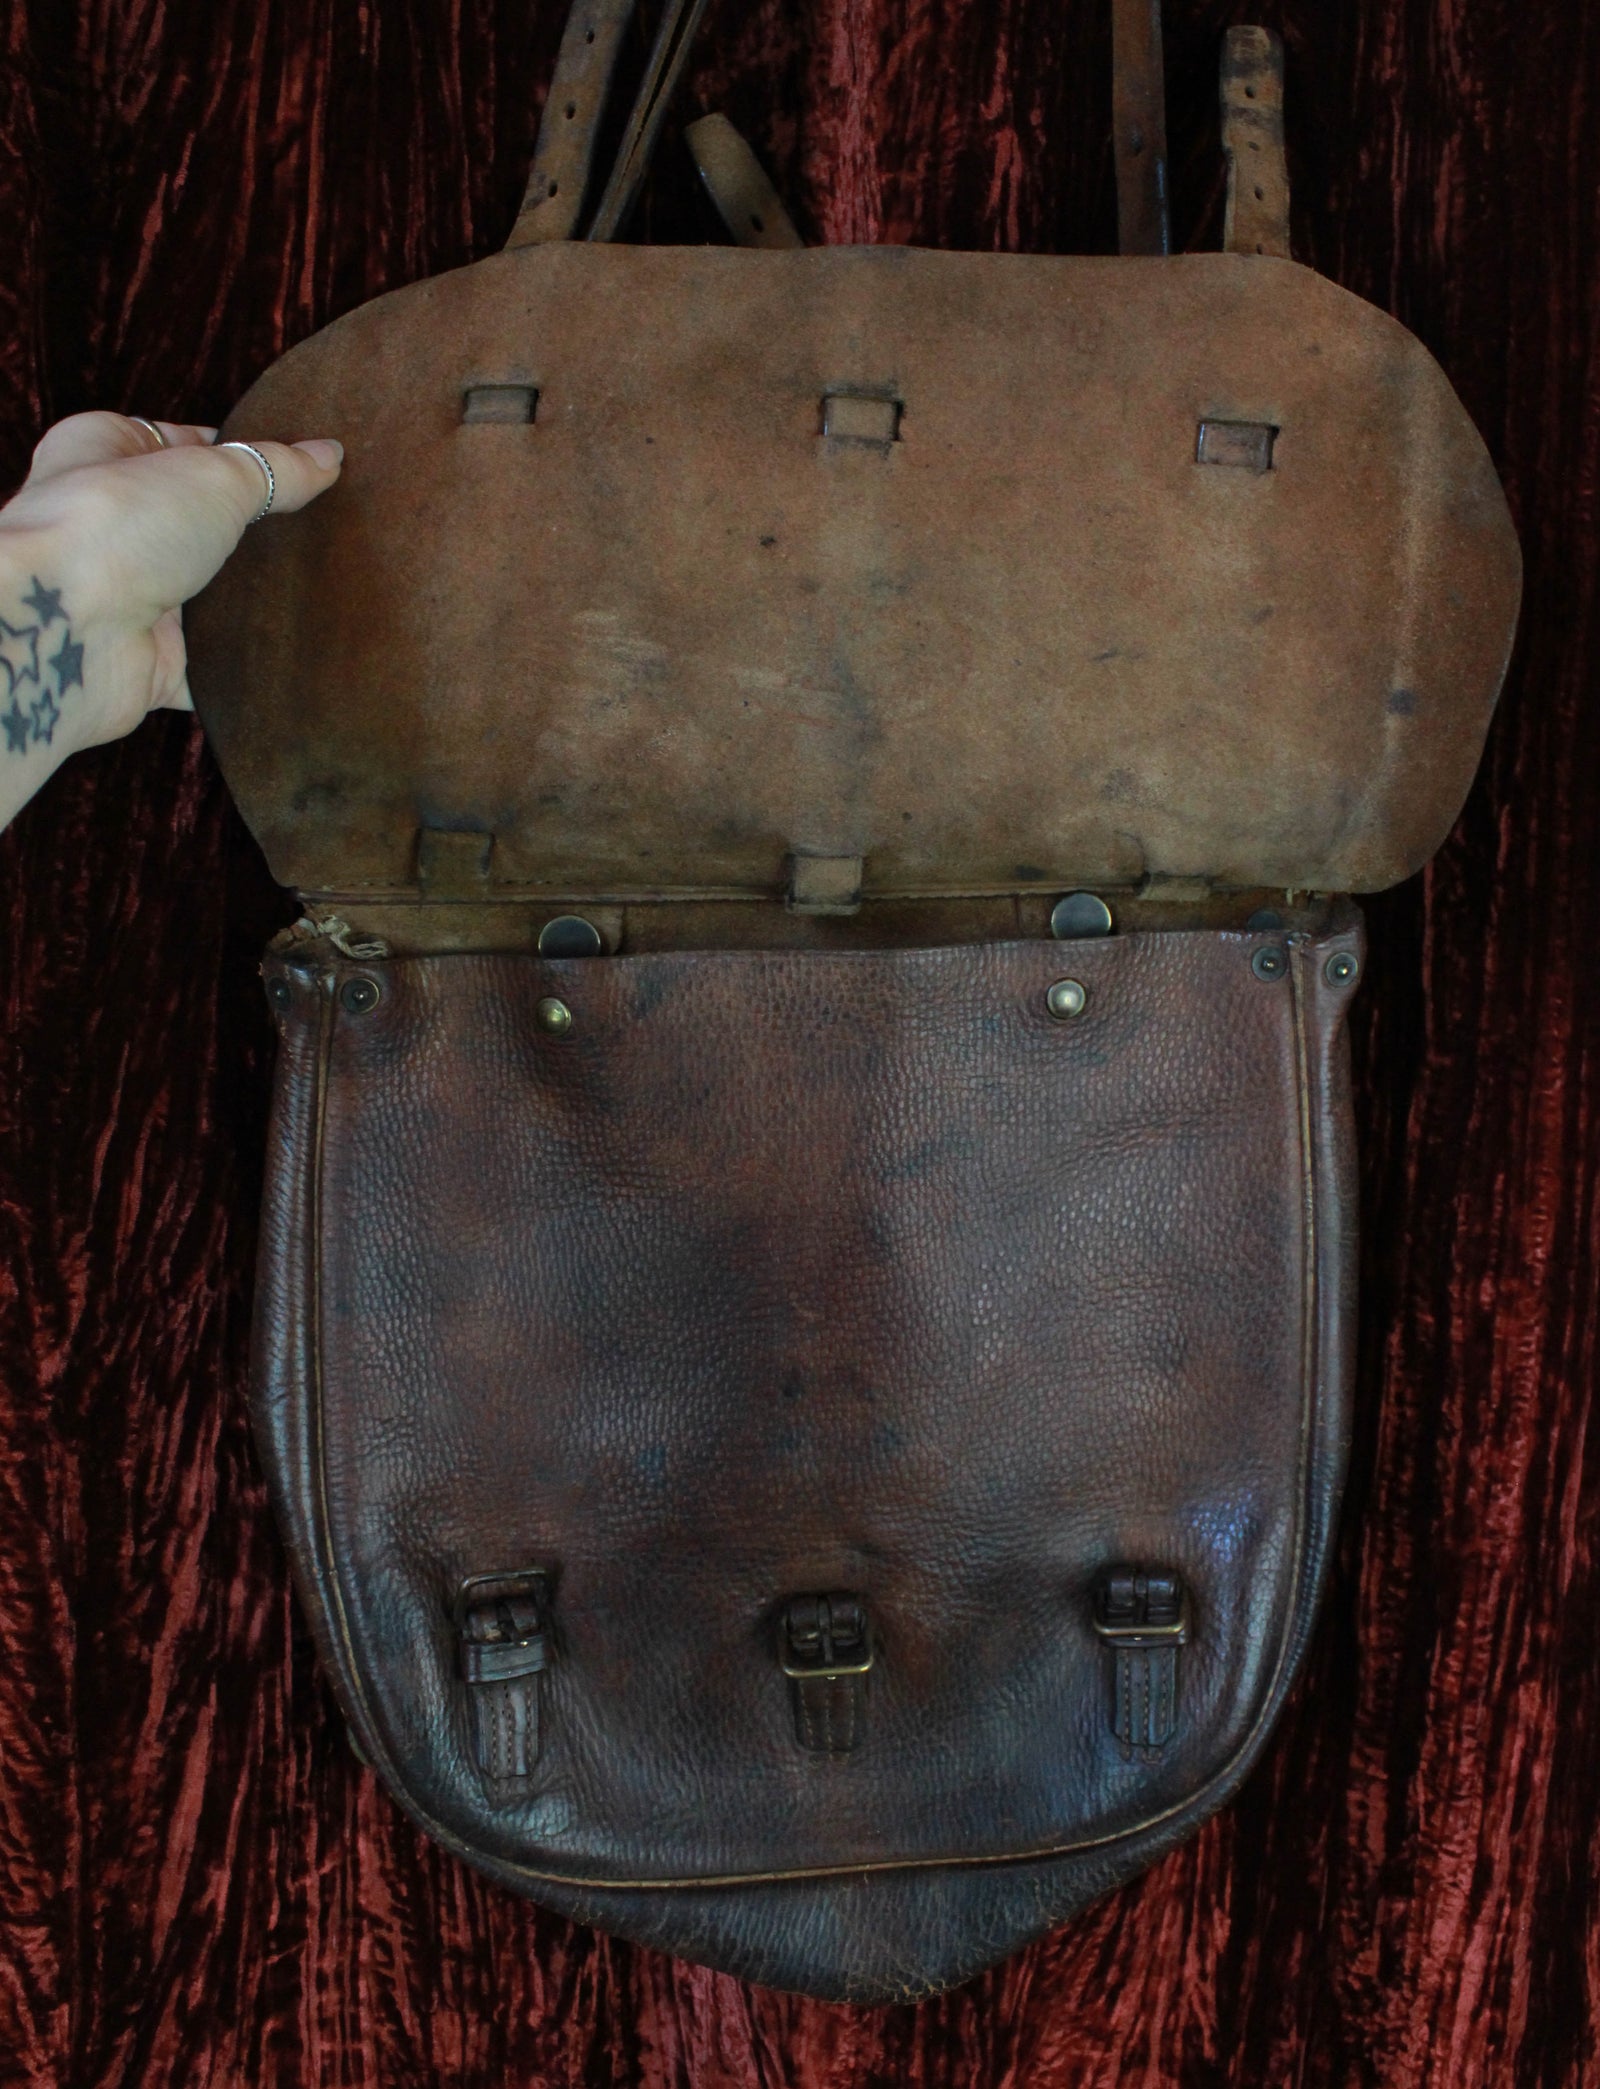 Antique Leather Bag